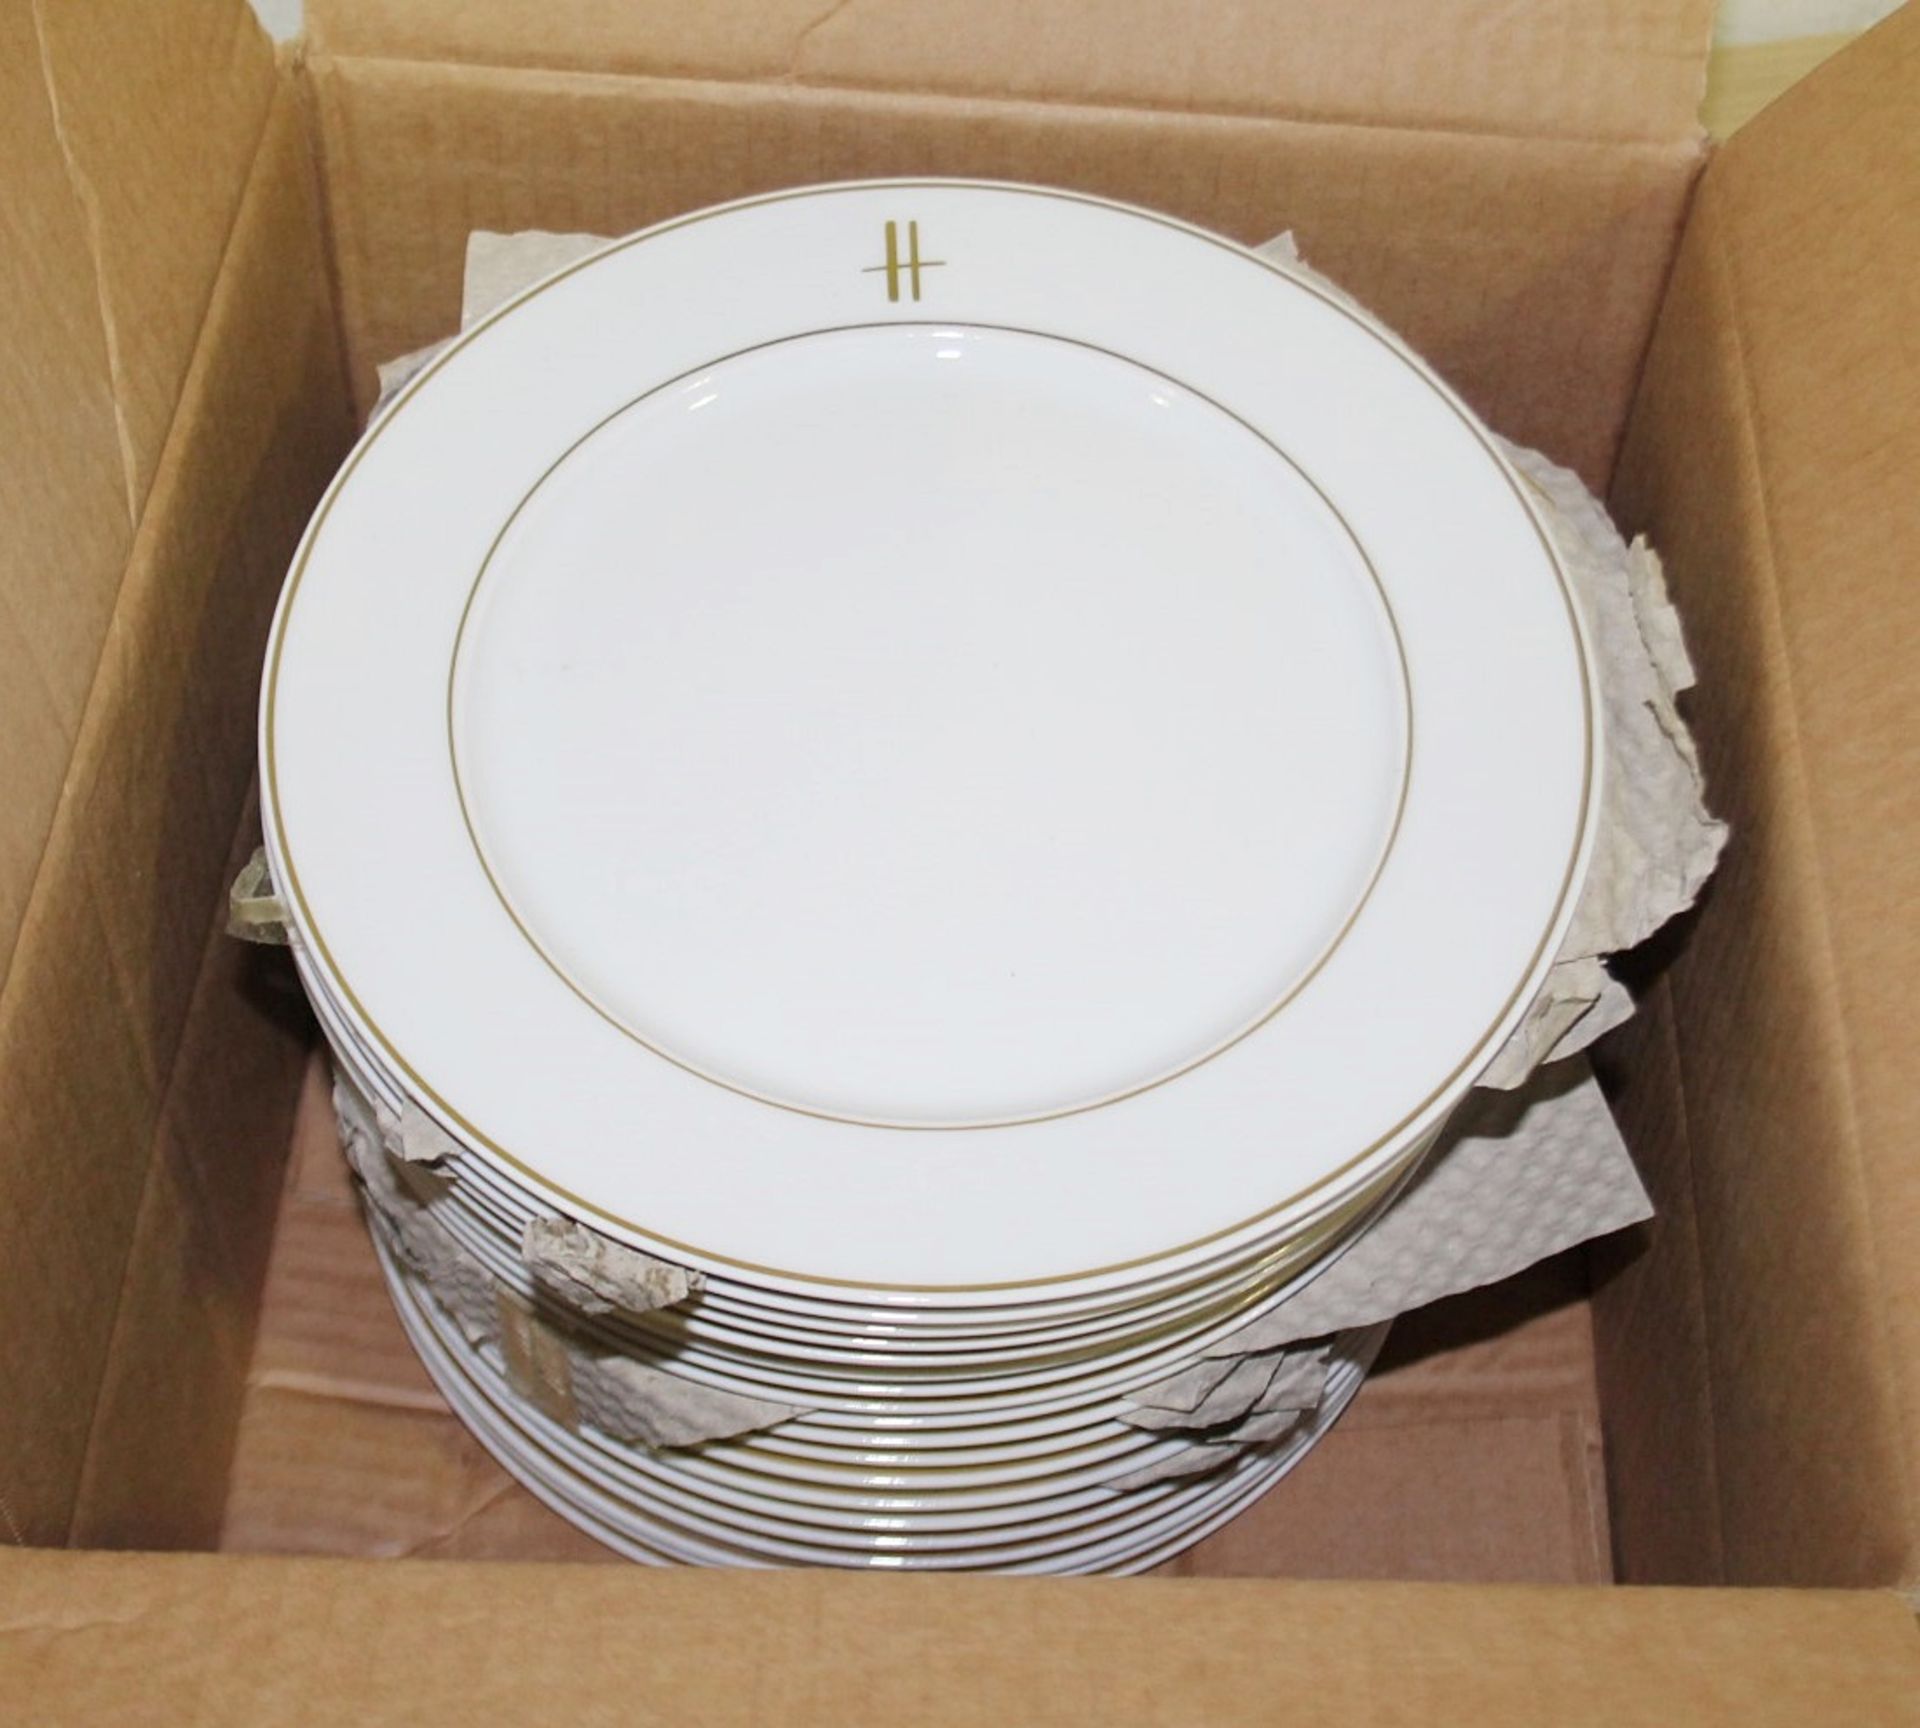 20 x PILLIVUYT Porcelain Small Dinner / Dessert Plates In White Featuring 'Famous Branding' - Image 2 of 4